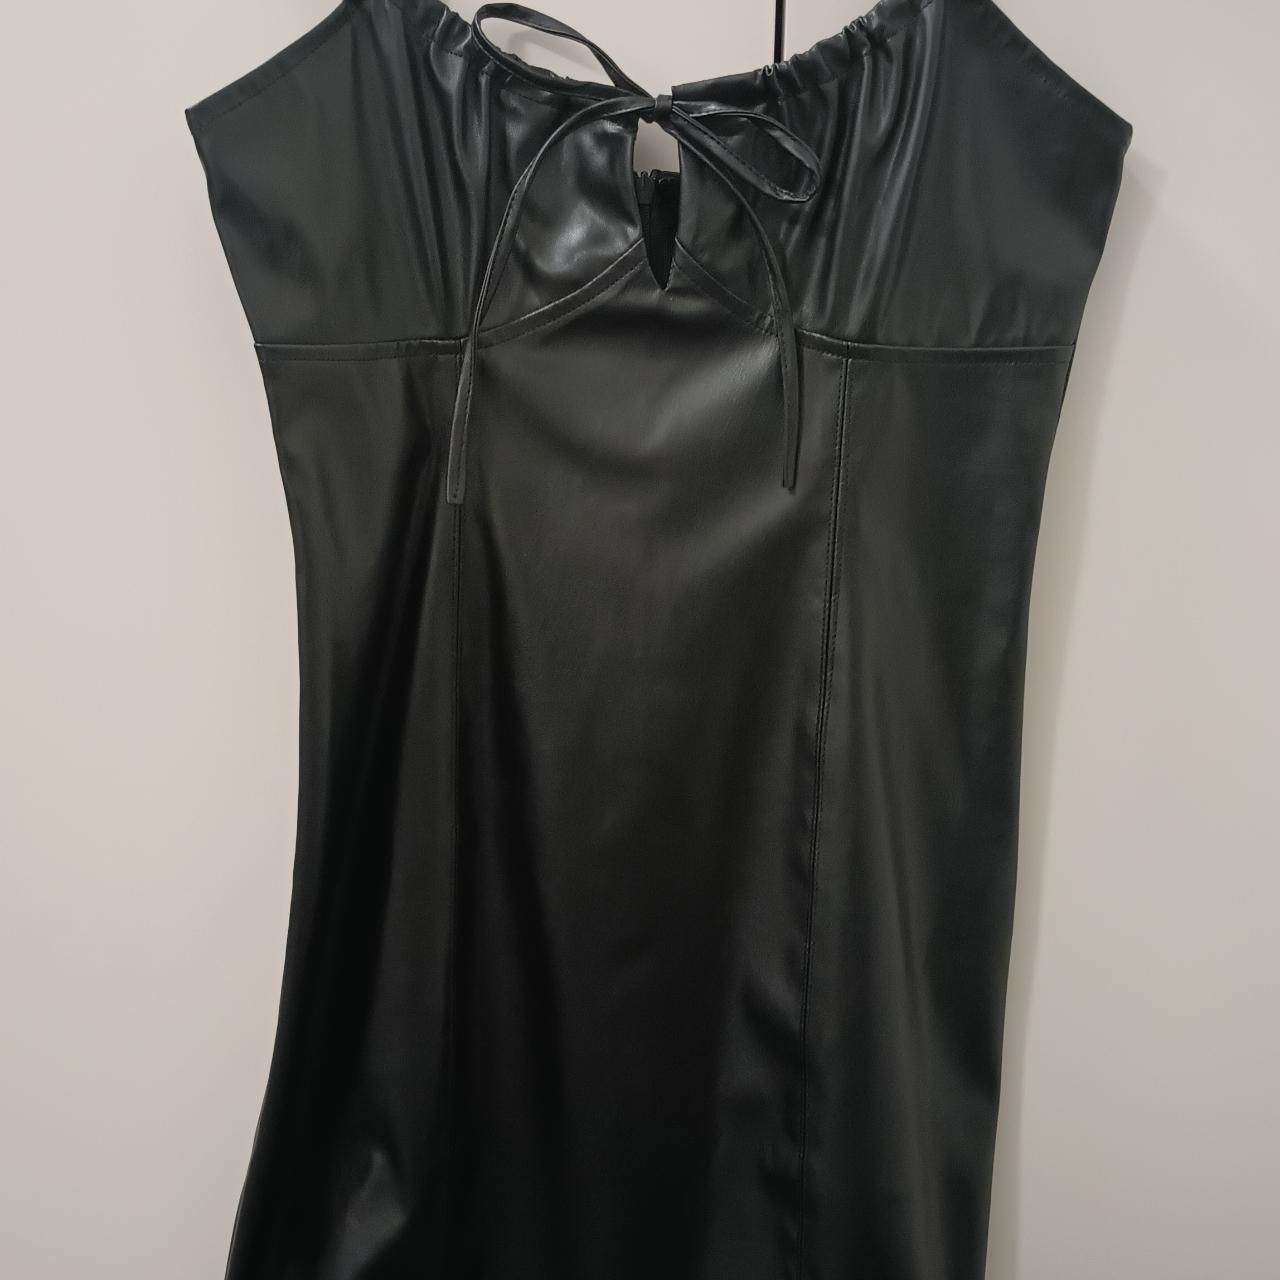 Emory Park vegan leather minidress, never worn - Depop